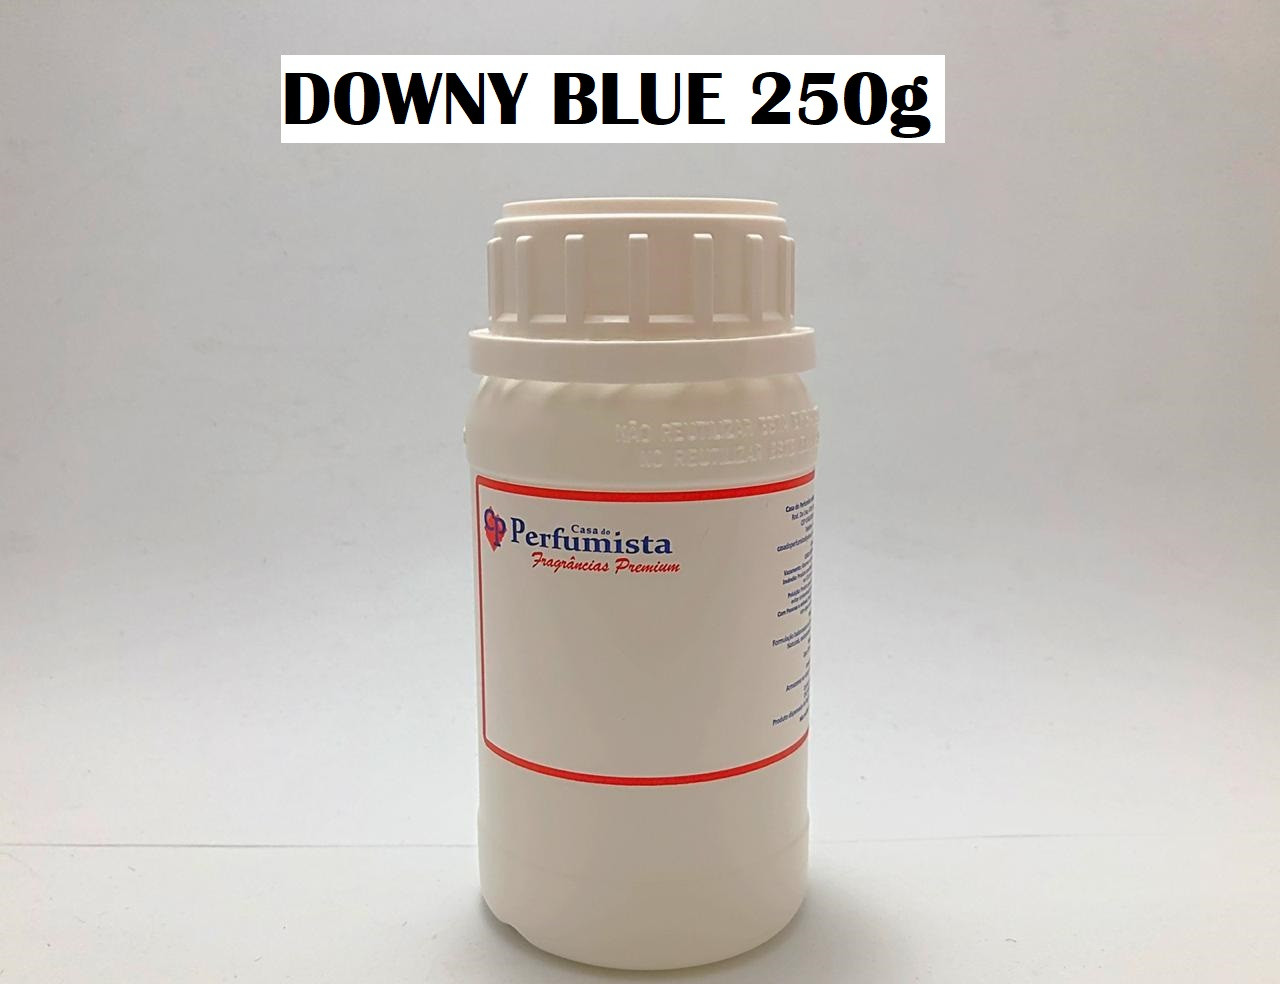 DOWNY BLUE - 250g